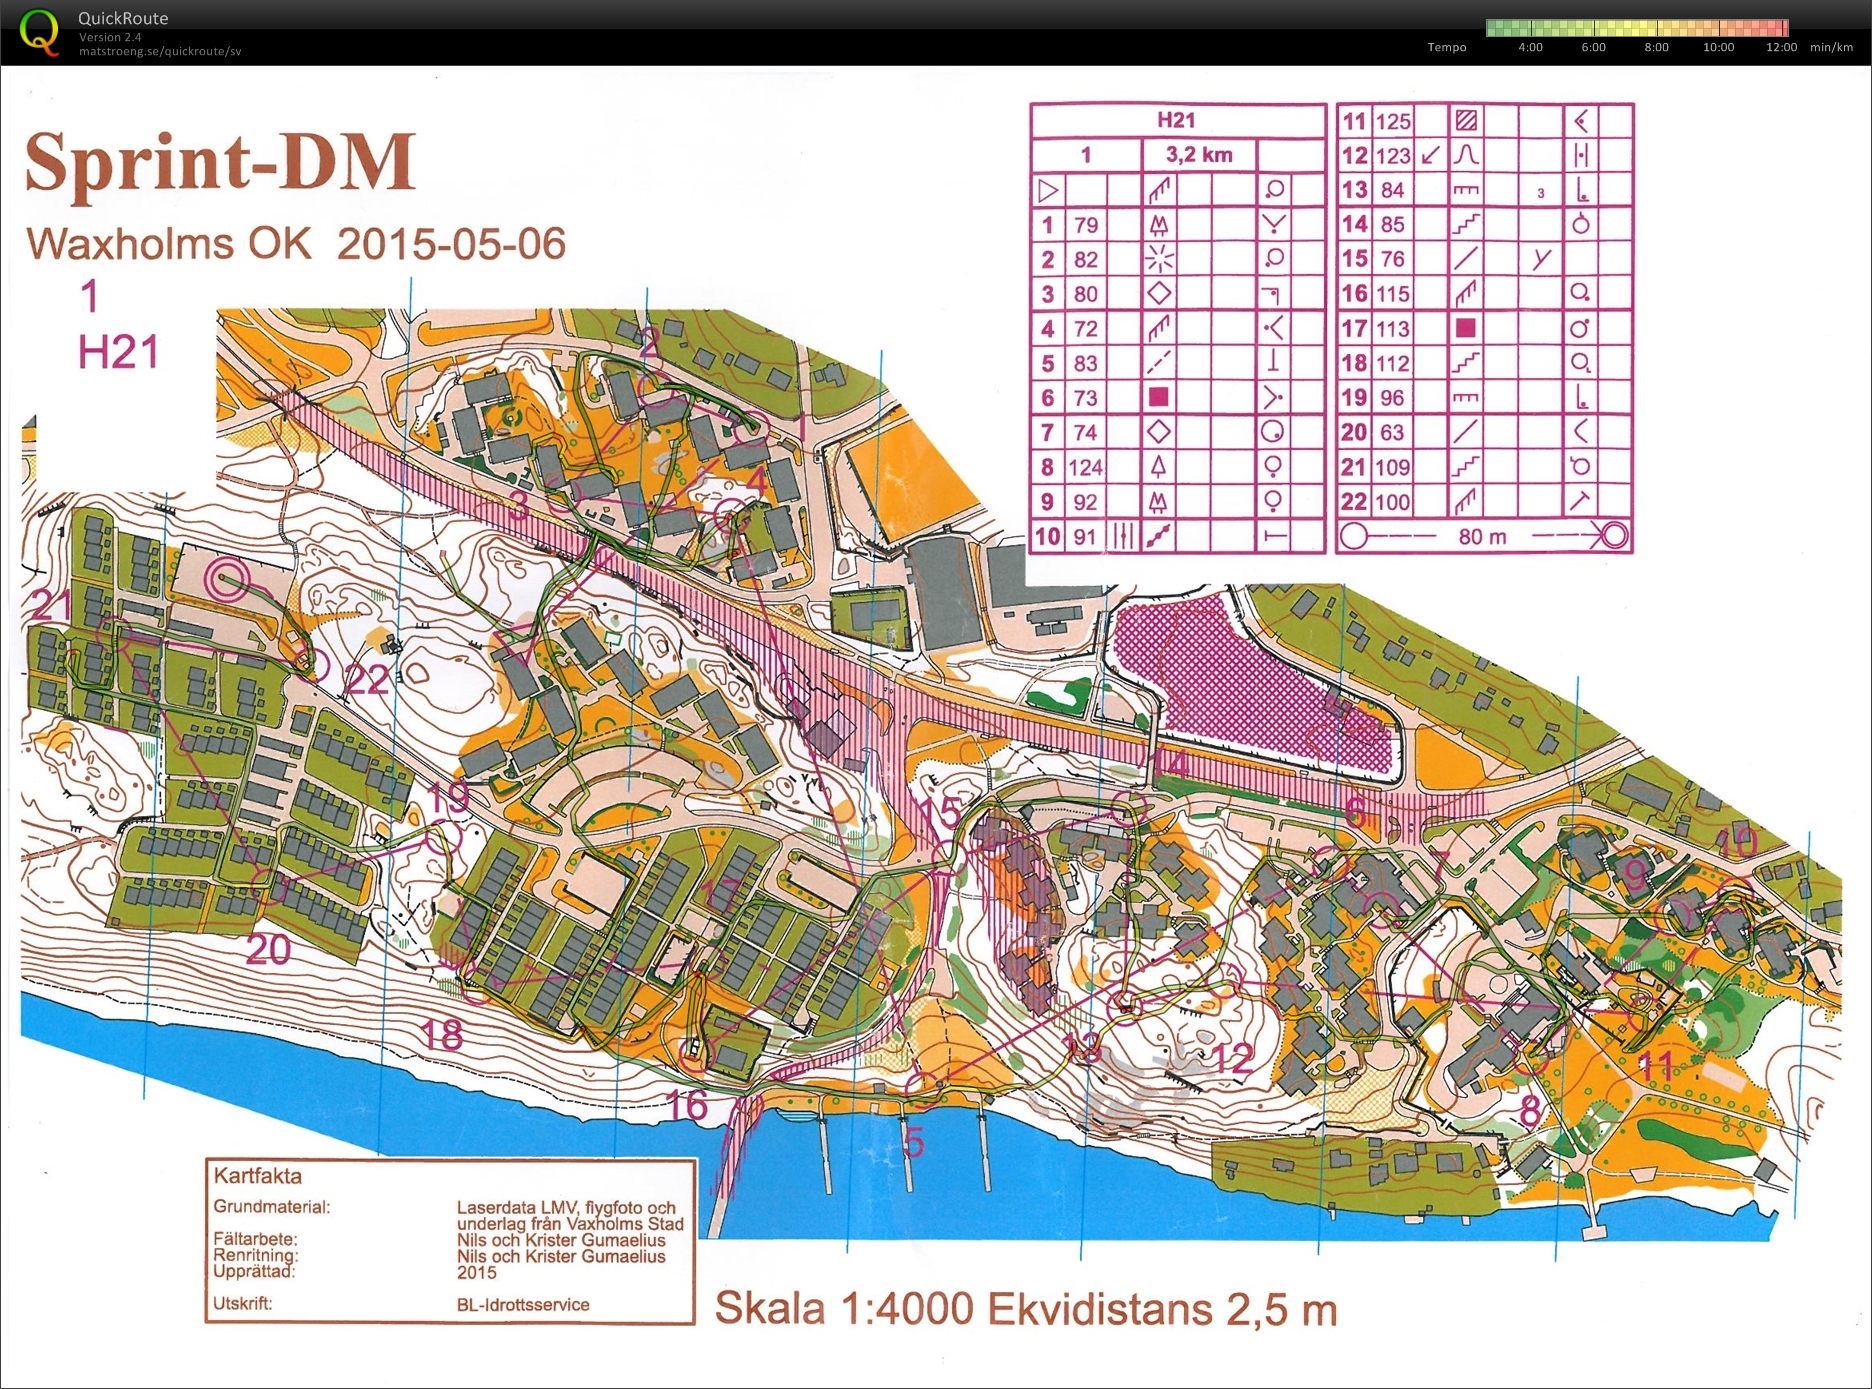 DM sprint Stockholm (H21) (06-05-2015)